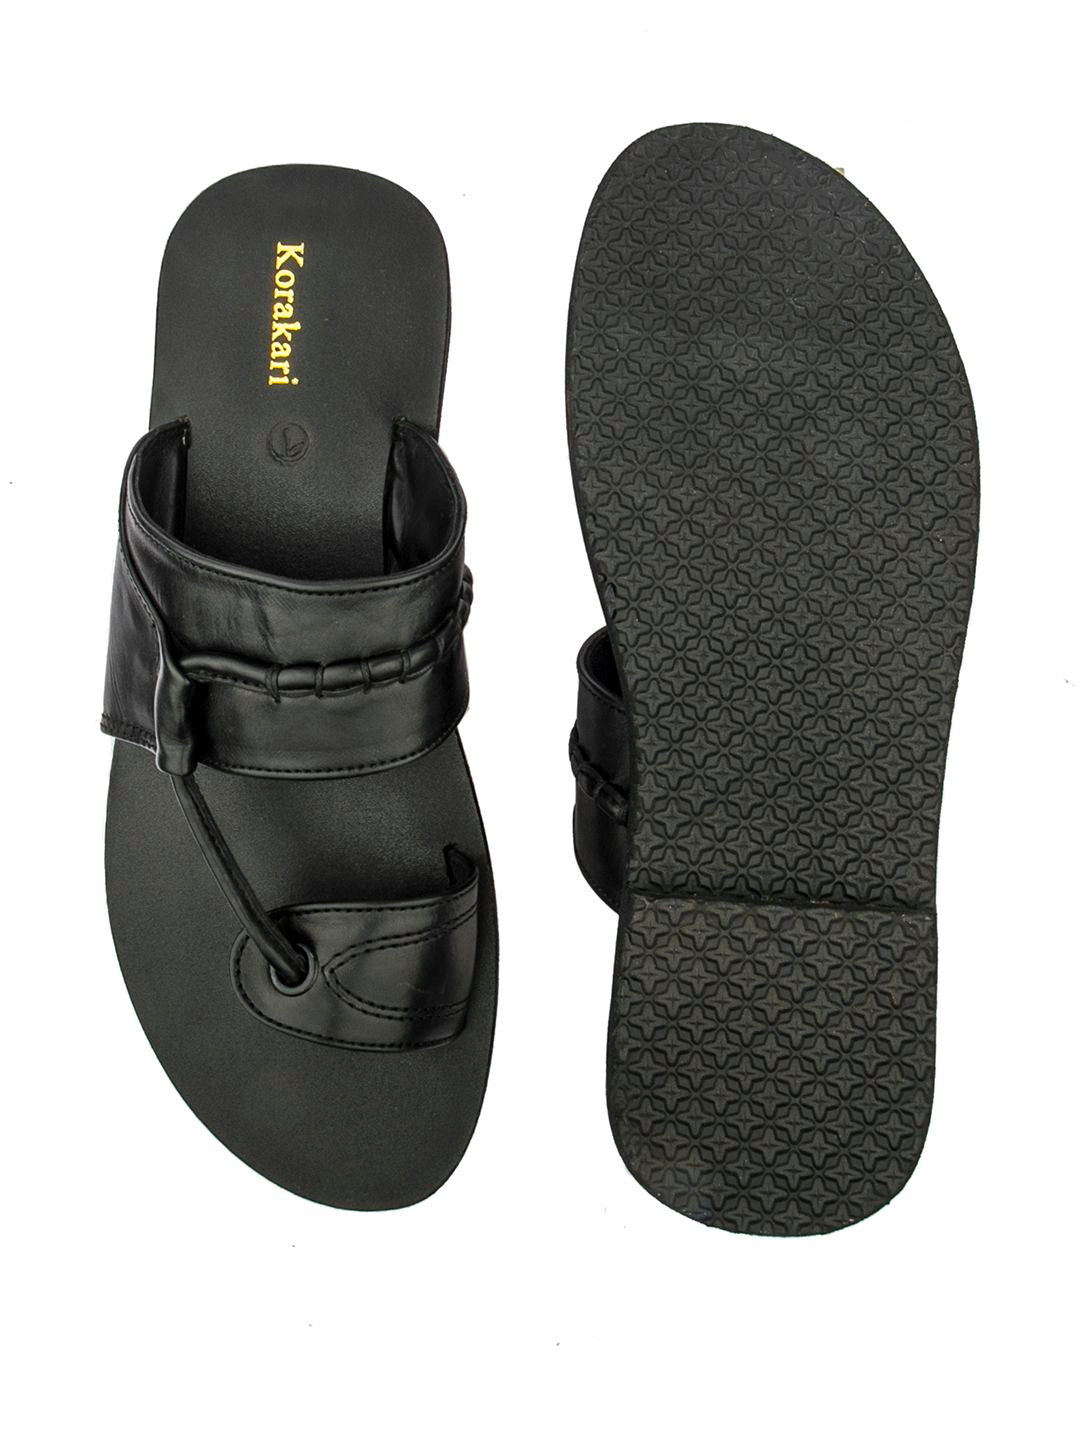 Effortless Style: Handmade Black Leather Sandals for Men